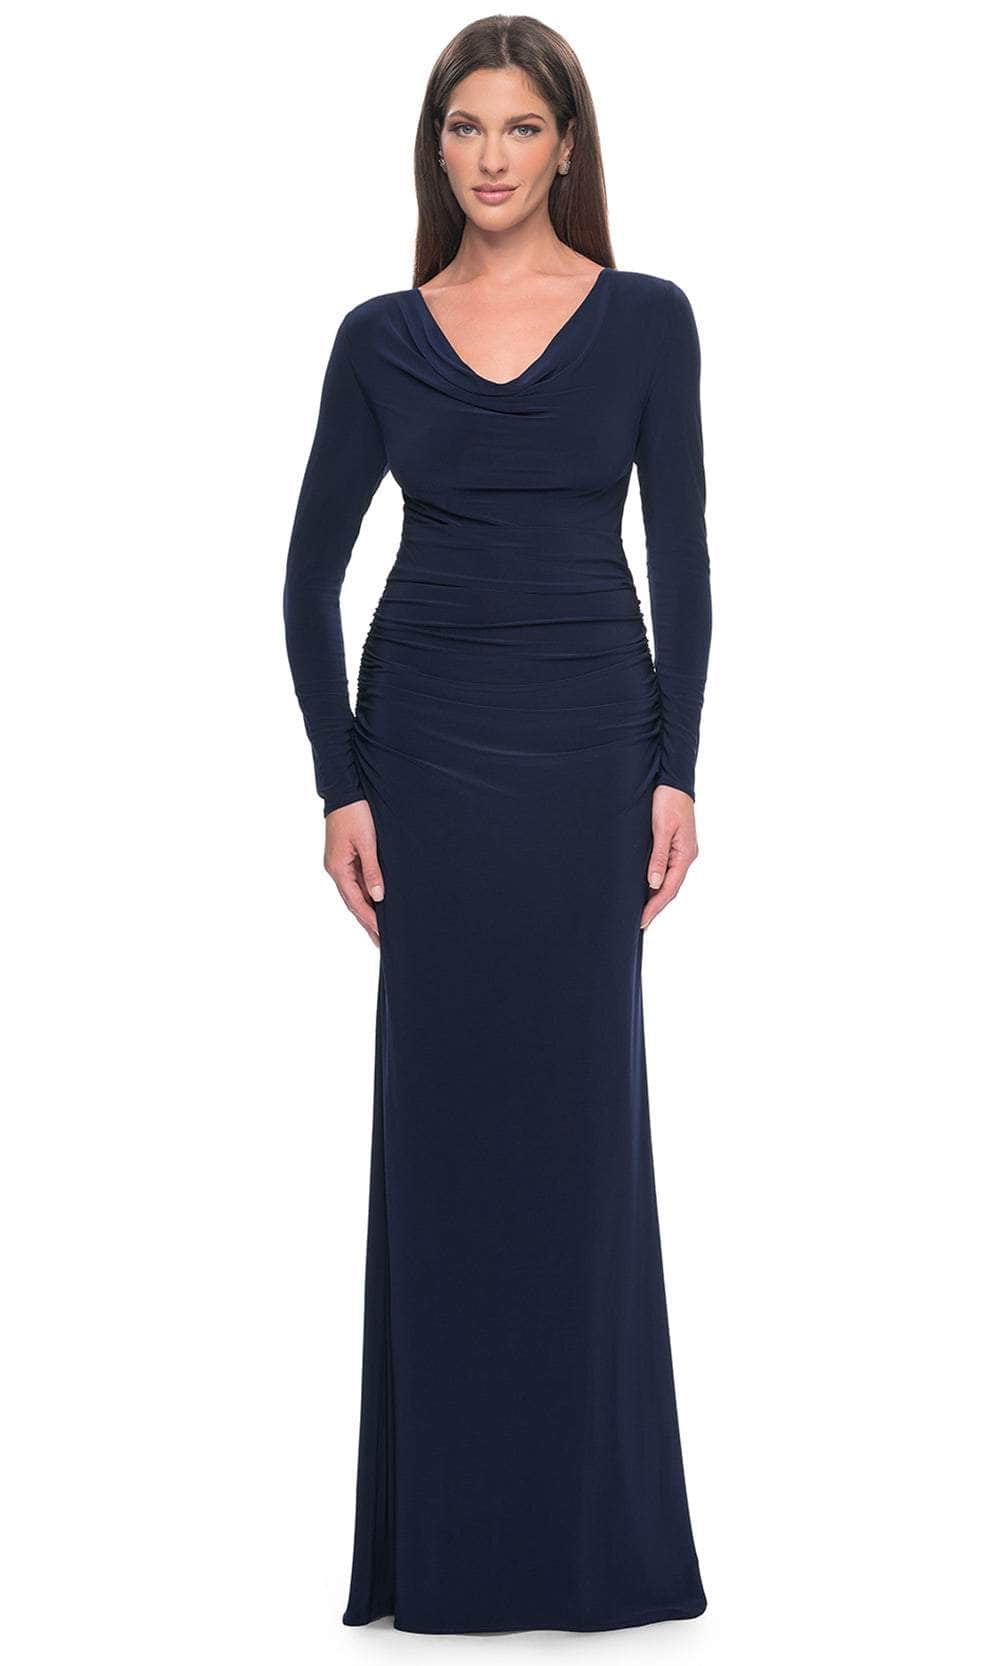 La Femme 30813 - Long Sleeve Jersey Evening Dress Mother of the Bride Dresses